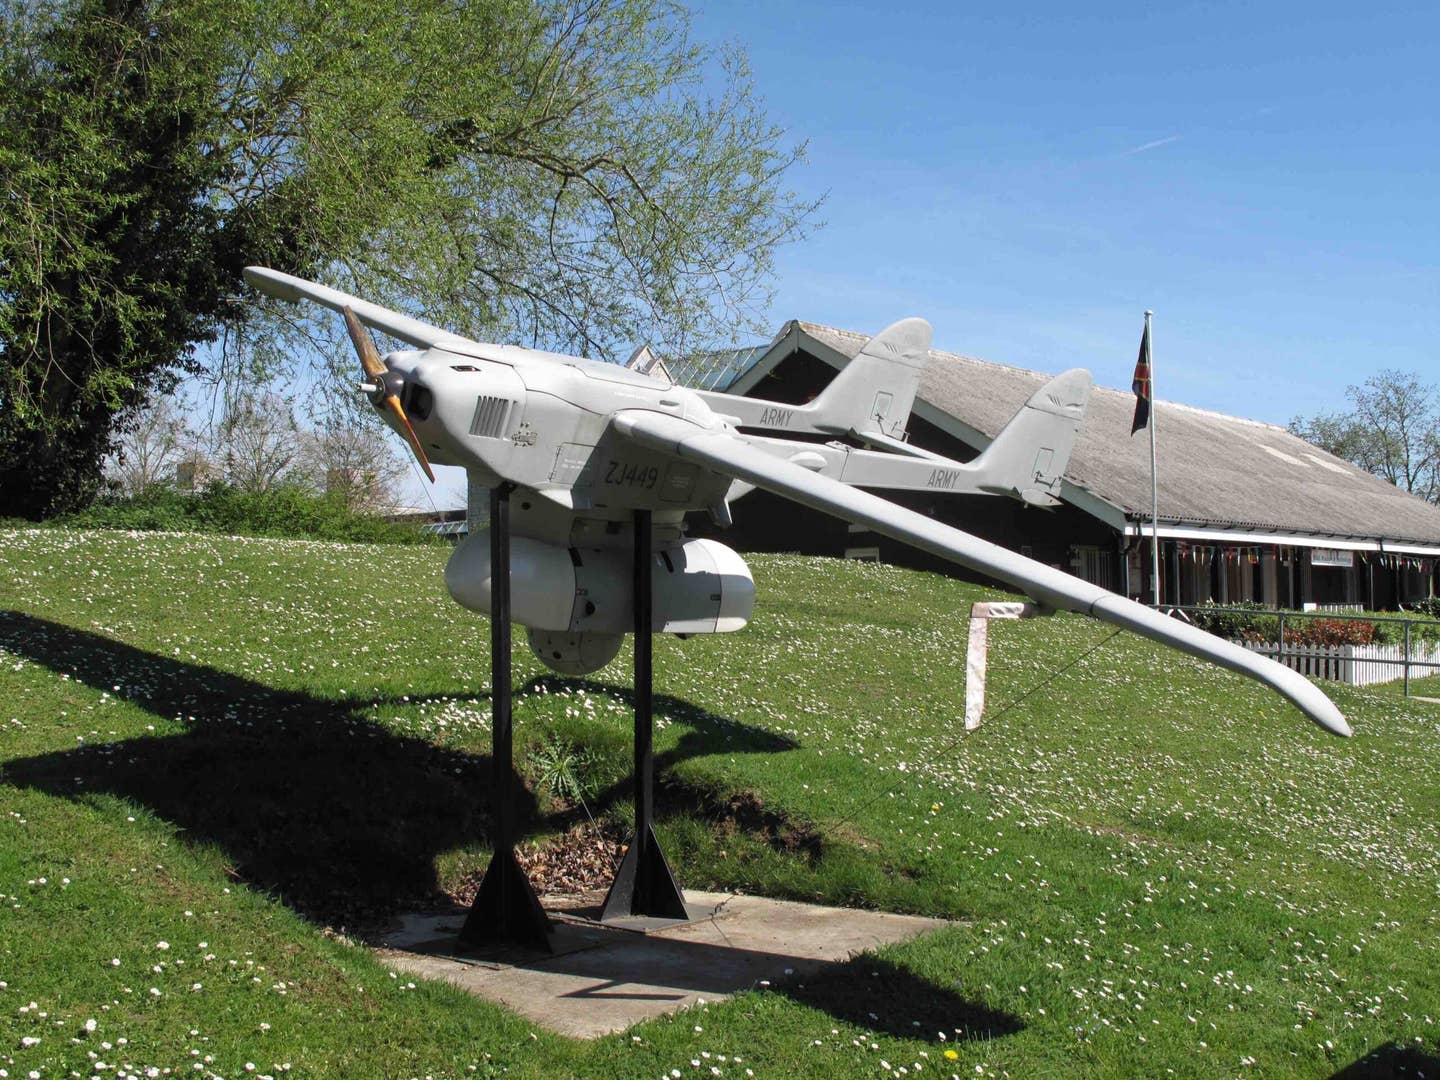 BAE Phoenix on display outside The REME Museum of Technology. <em>Orp20 via Wikimedia Commons</em>